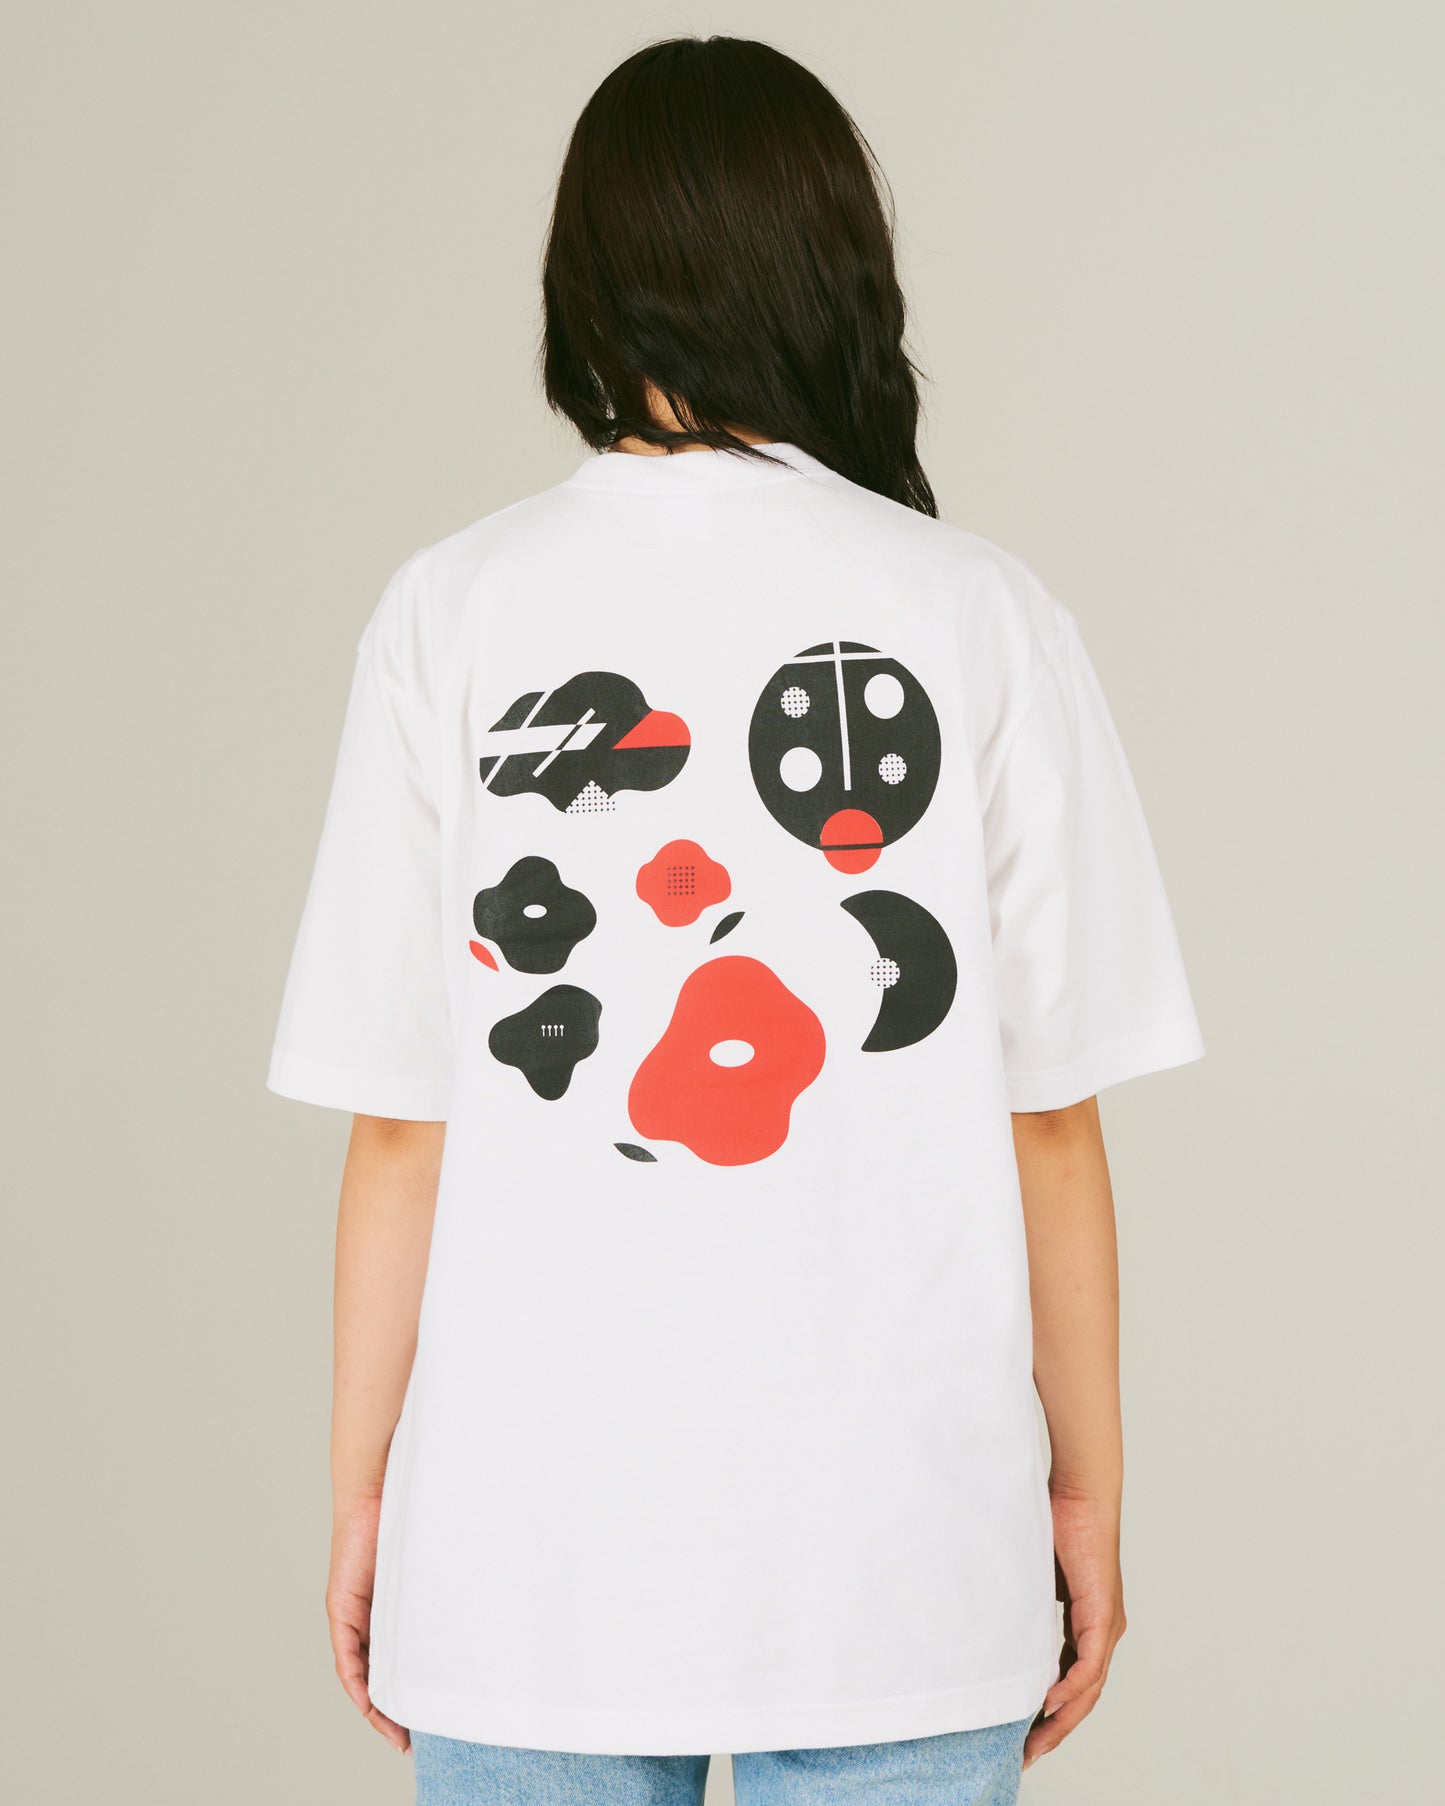 雪月風花 / Setsu-getsu-hu-ka T-Shirt  BACK PRINT